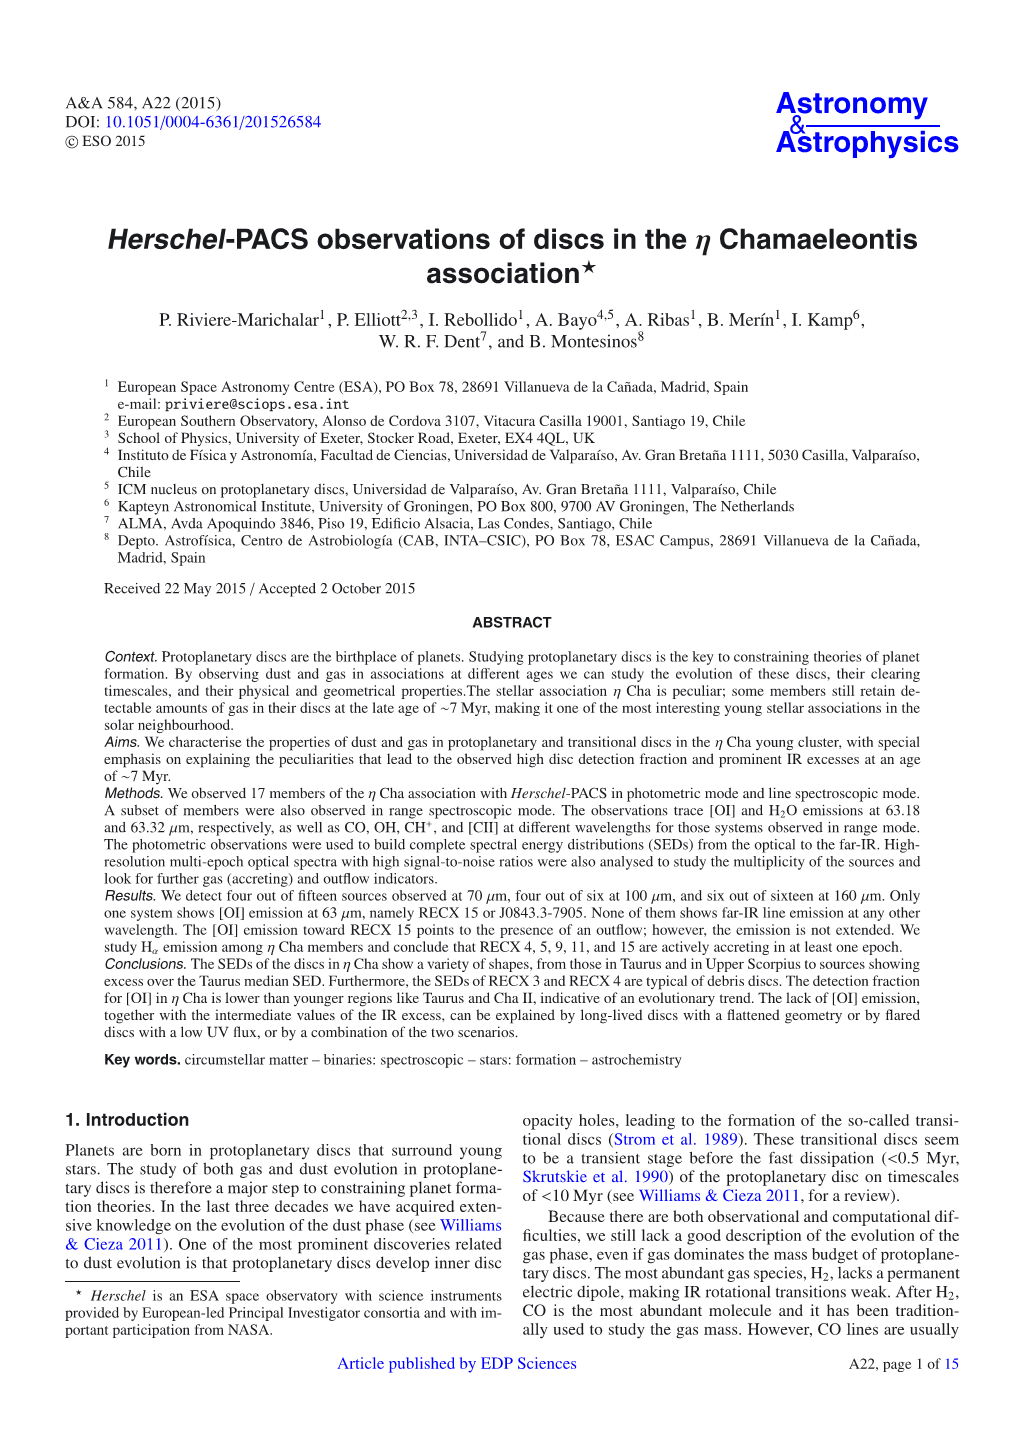 Herschel-PACS Observations of Discs in the Η Chamaeleontis Association⋆